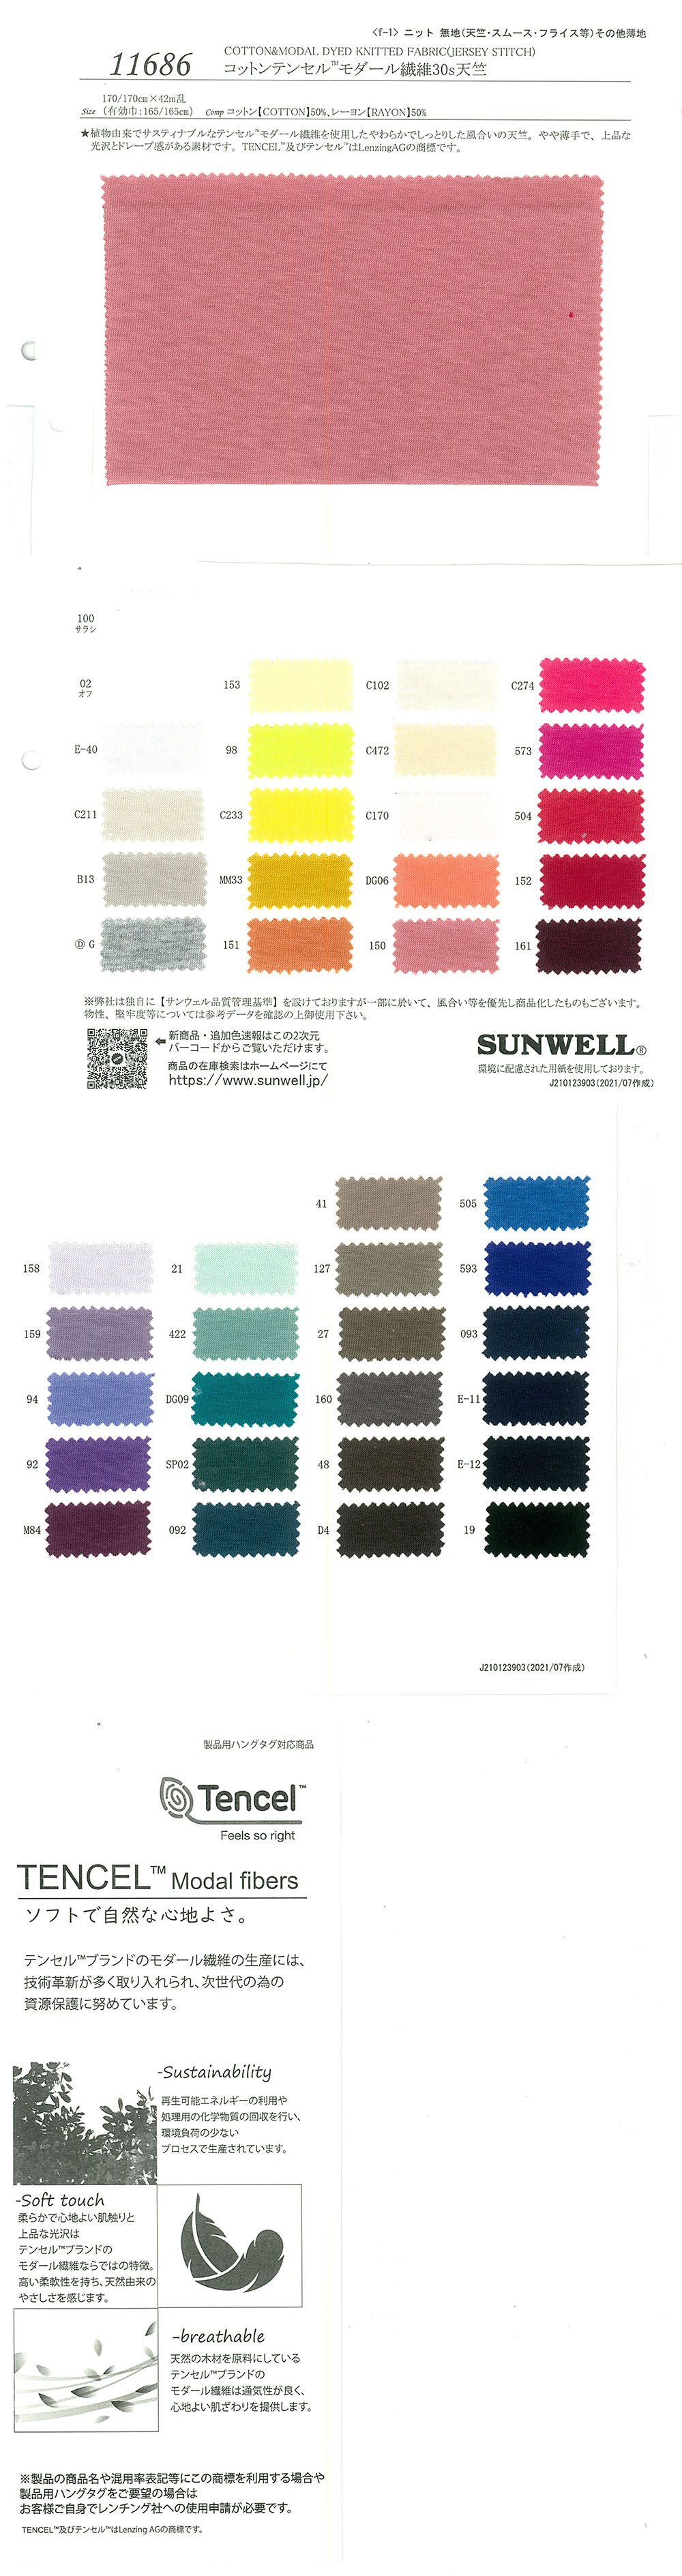 11686 Cotton/Tencel™ Modal Fiber 30 Single Thread Jersey[Textile / Fabric] SUNWELL